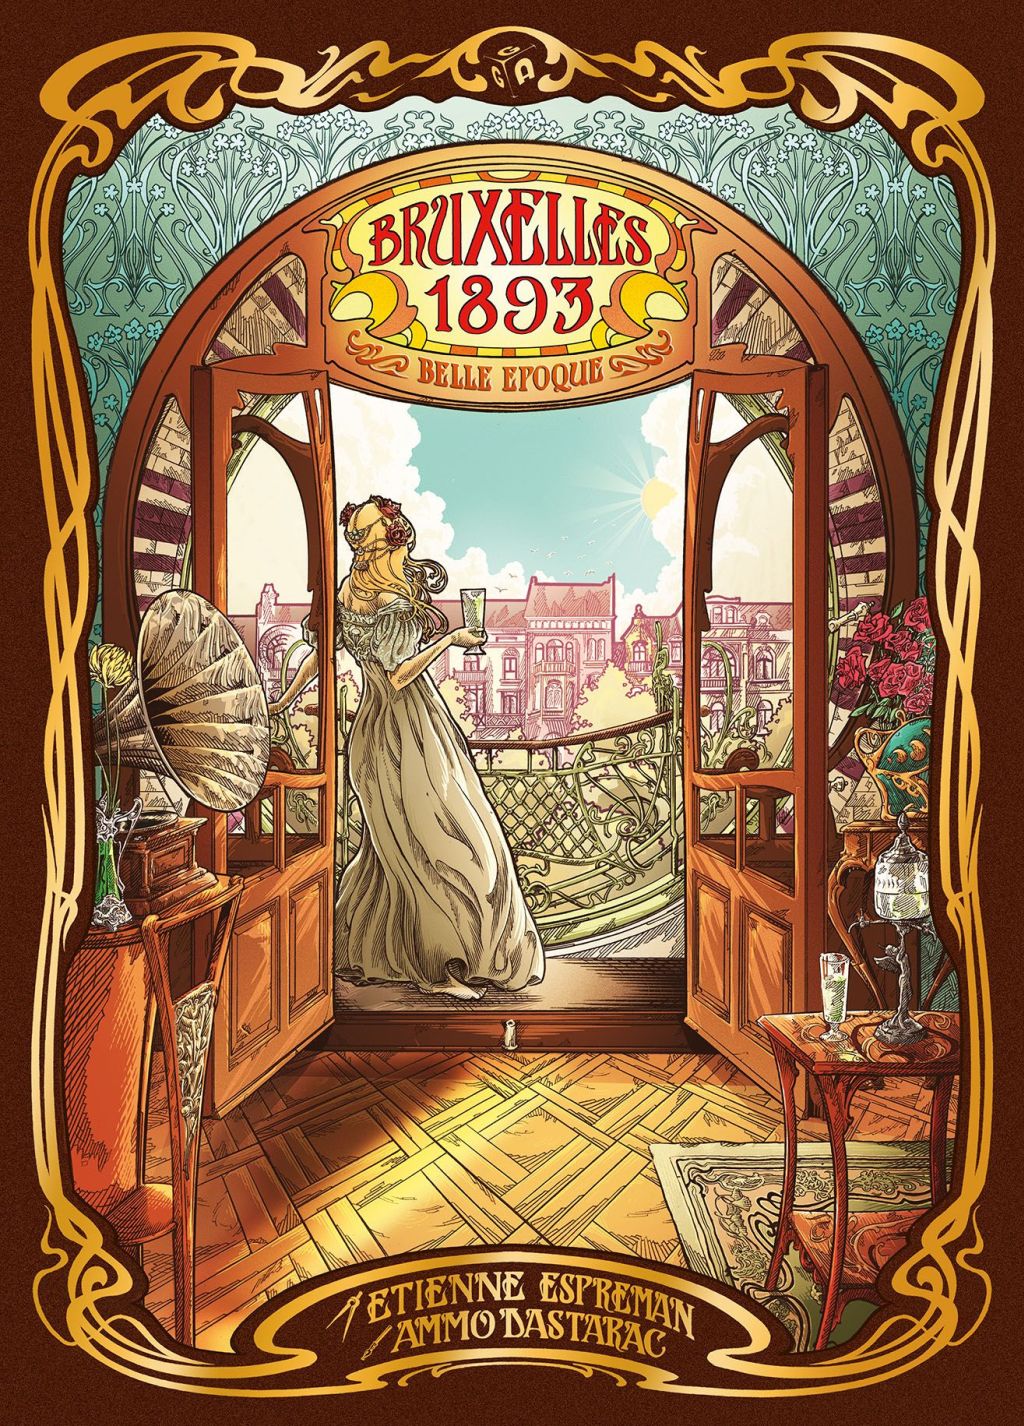 Bruxelles 1893 Belle Epoque - okładka gry